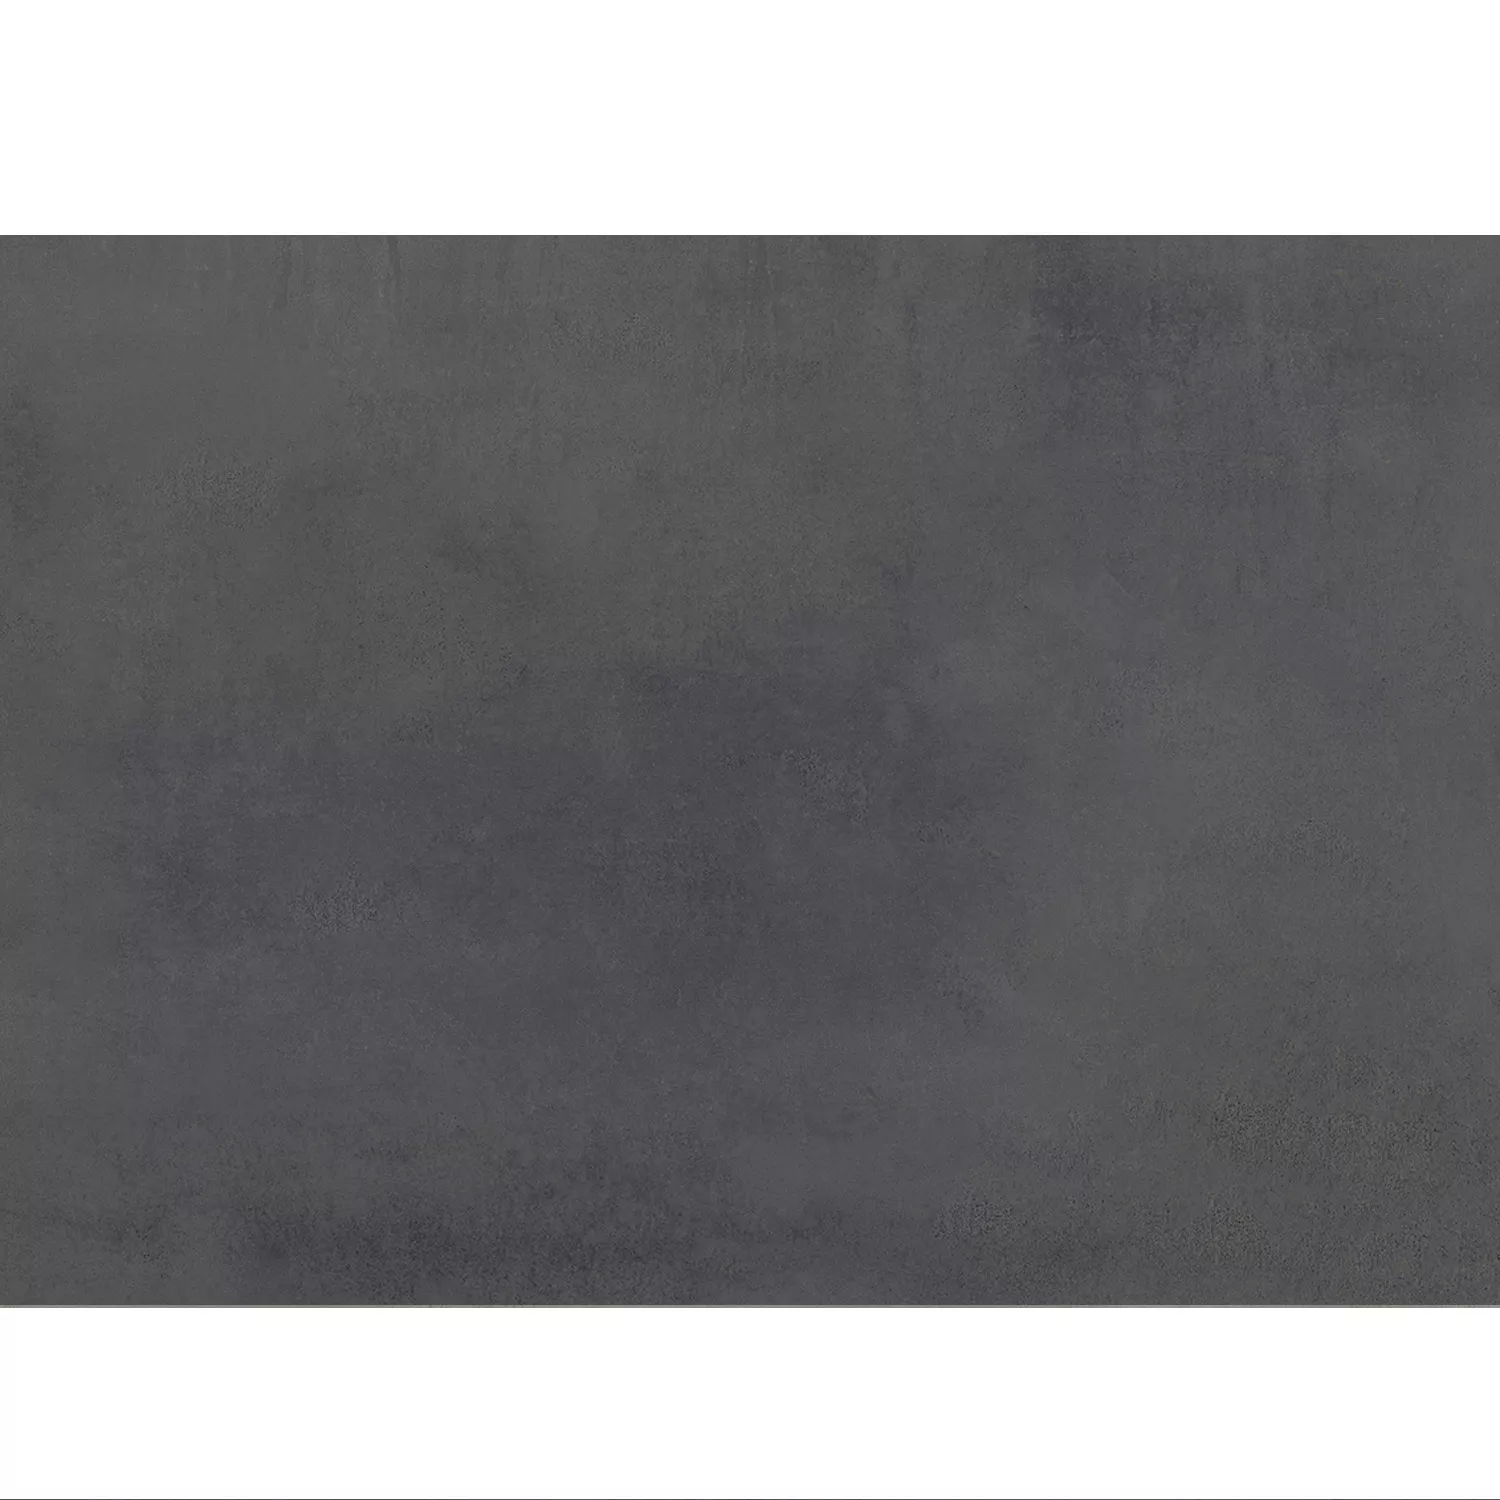 Vzorek Podlahové Dlaždice Tycoon Betonový Vzhled R10 Antracitová 120x260cm